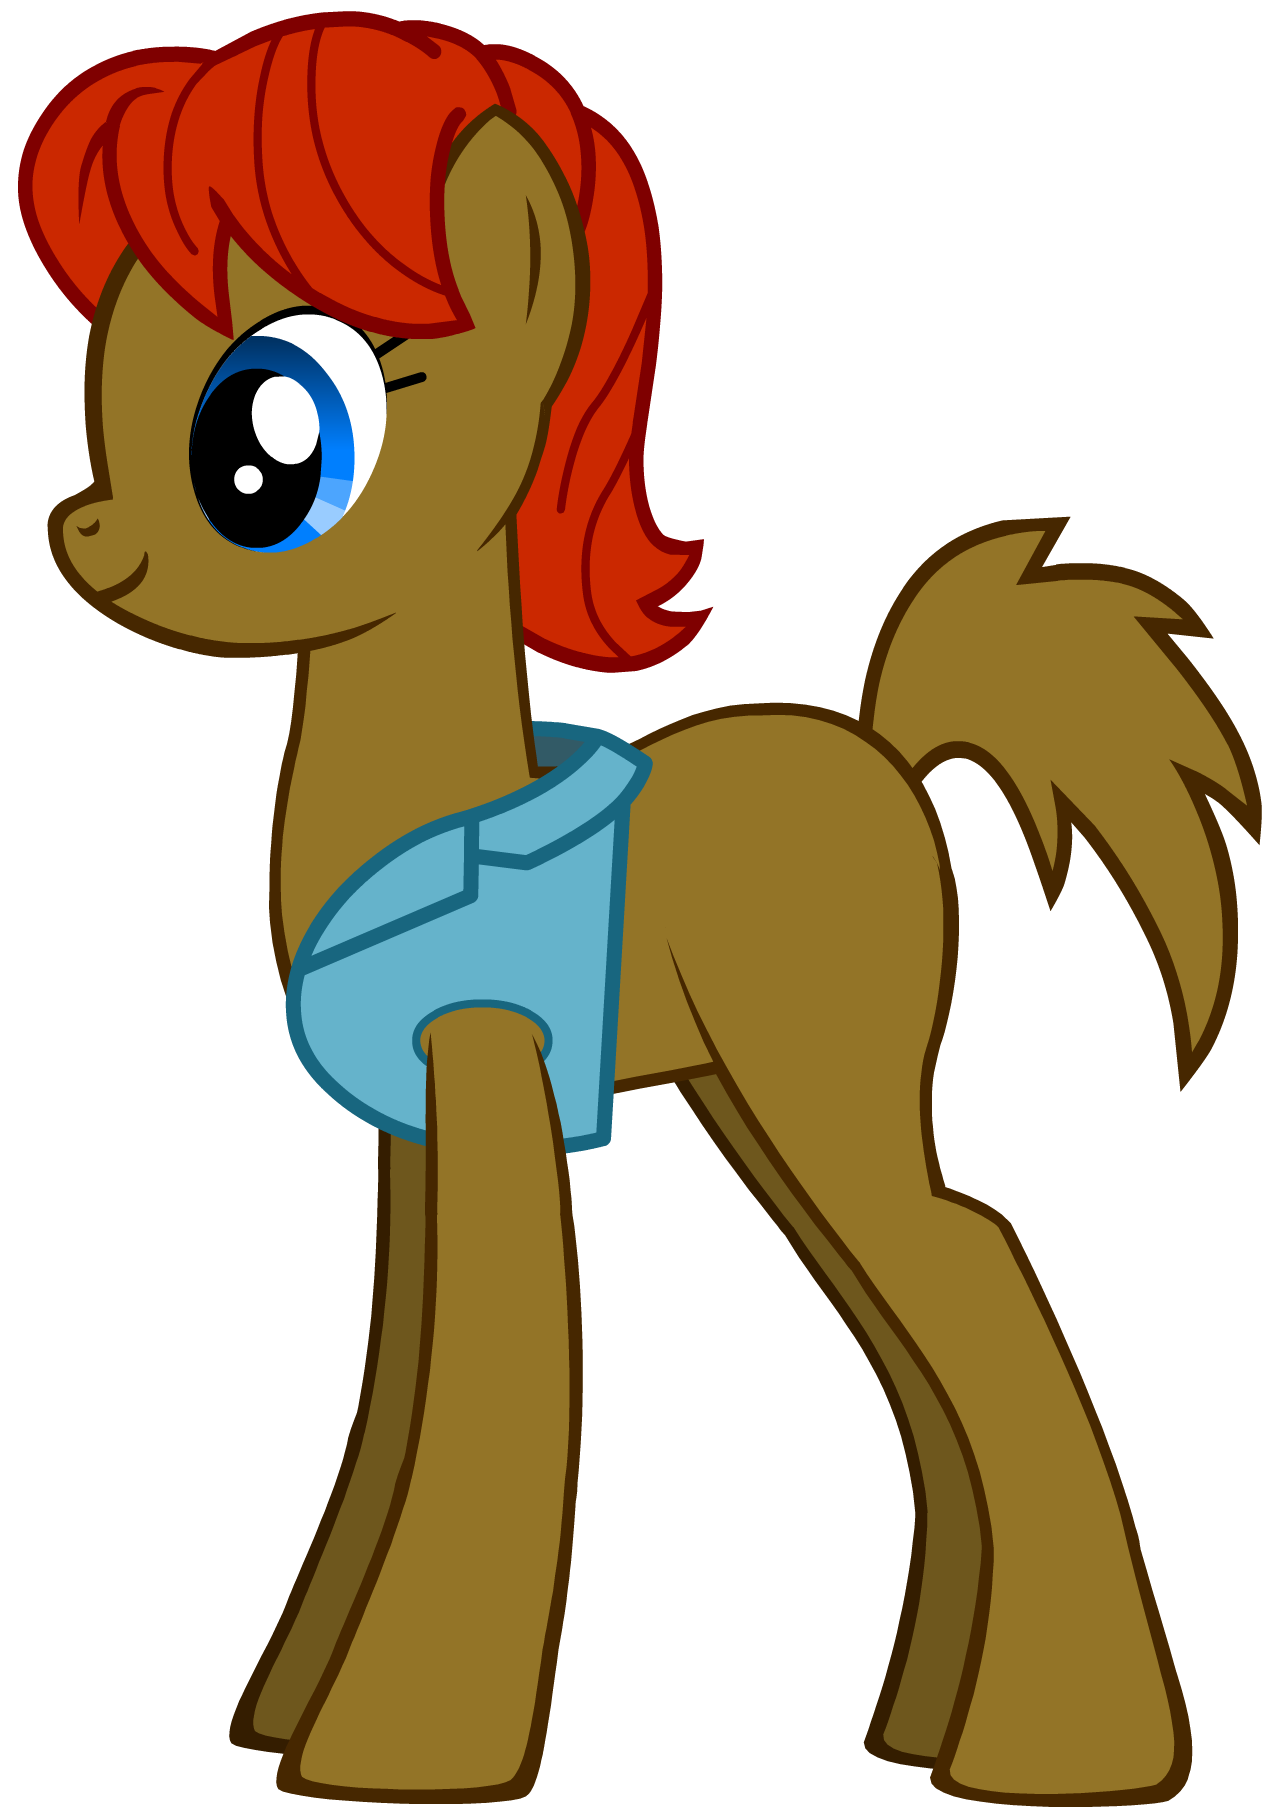 Sally the pony